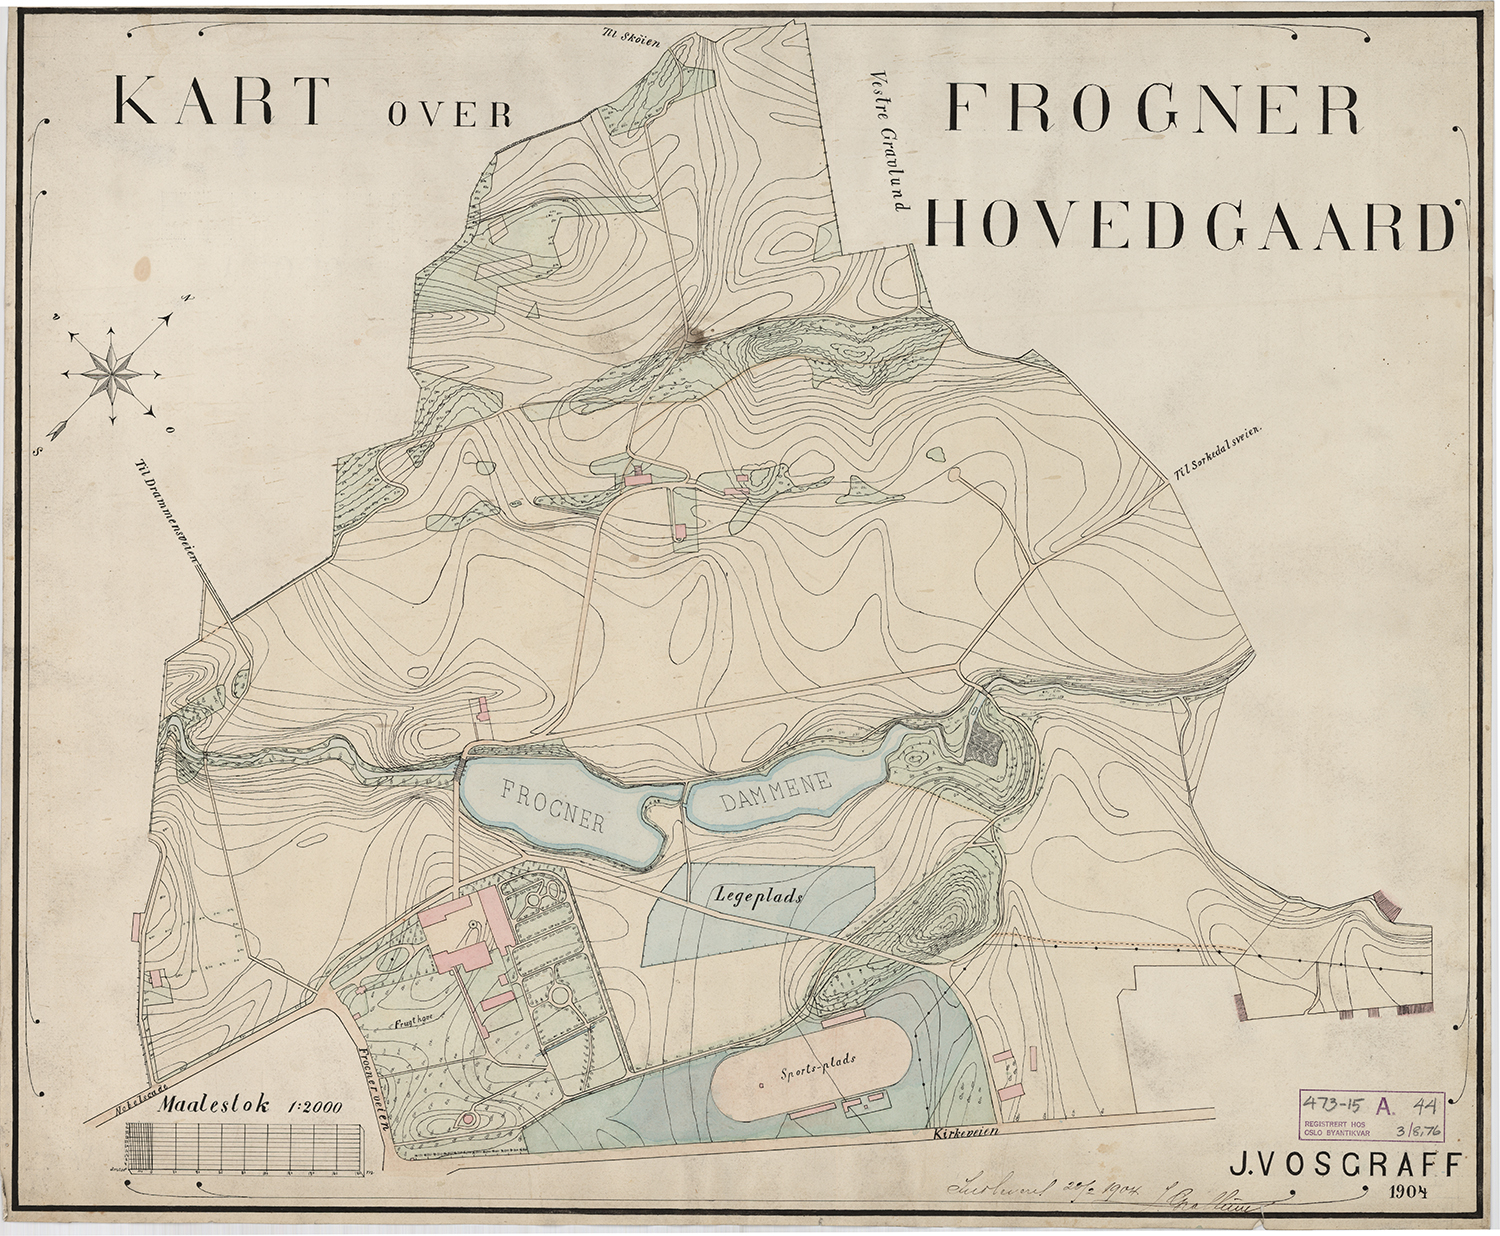 Kart over Frogner